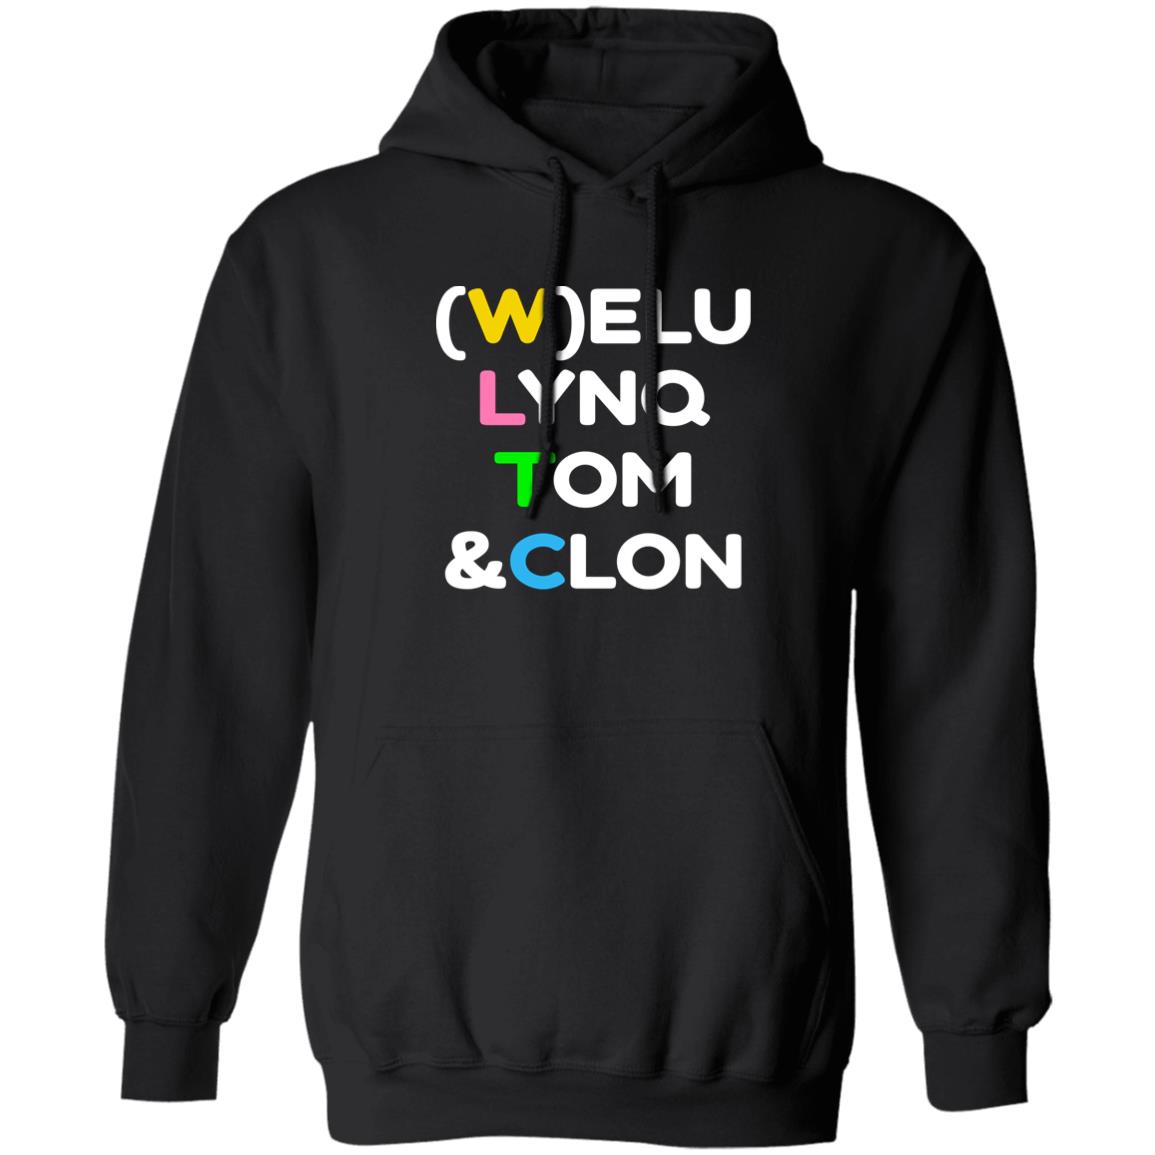 Wltc Welu Lynq Tom Clon Shirt 2